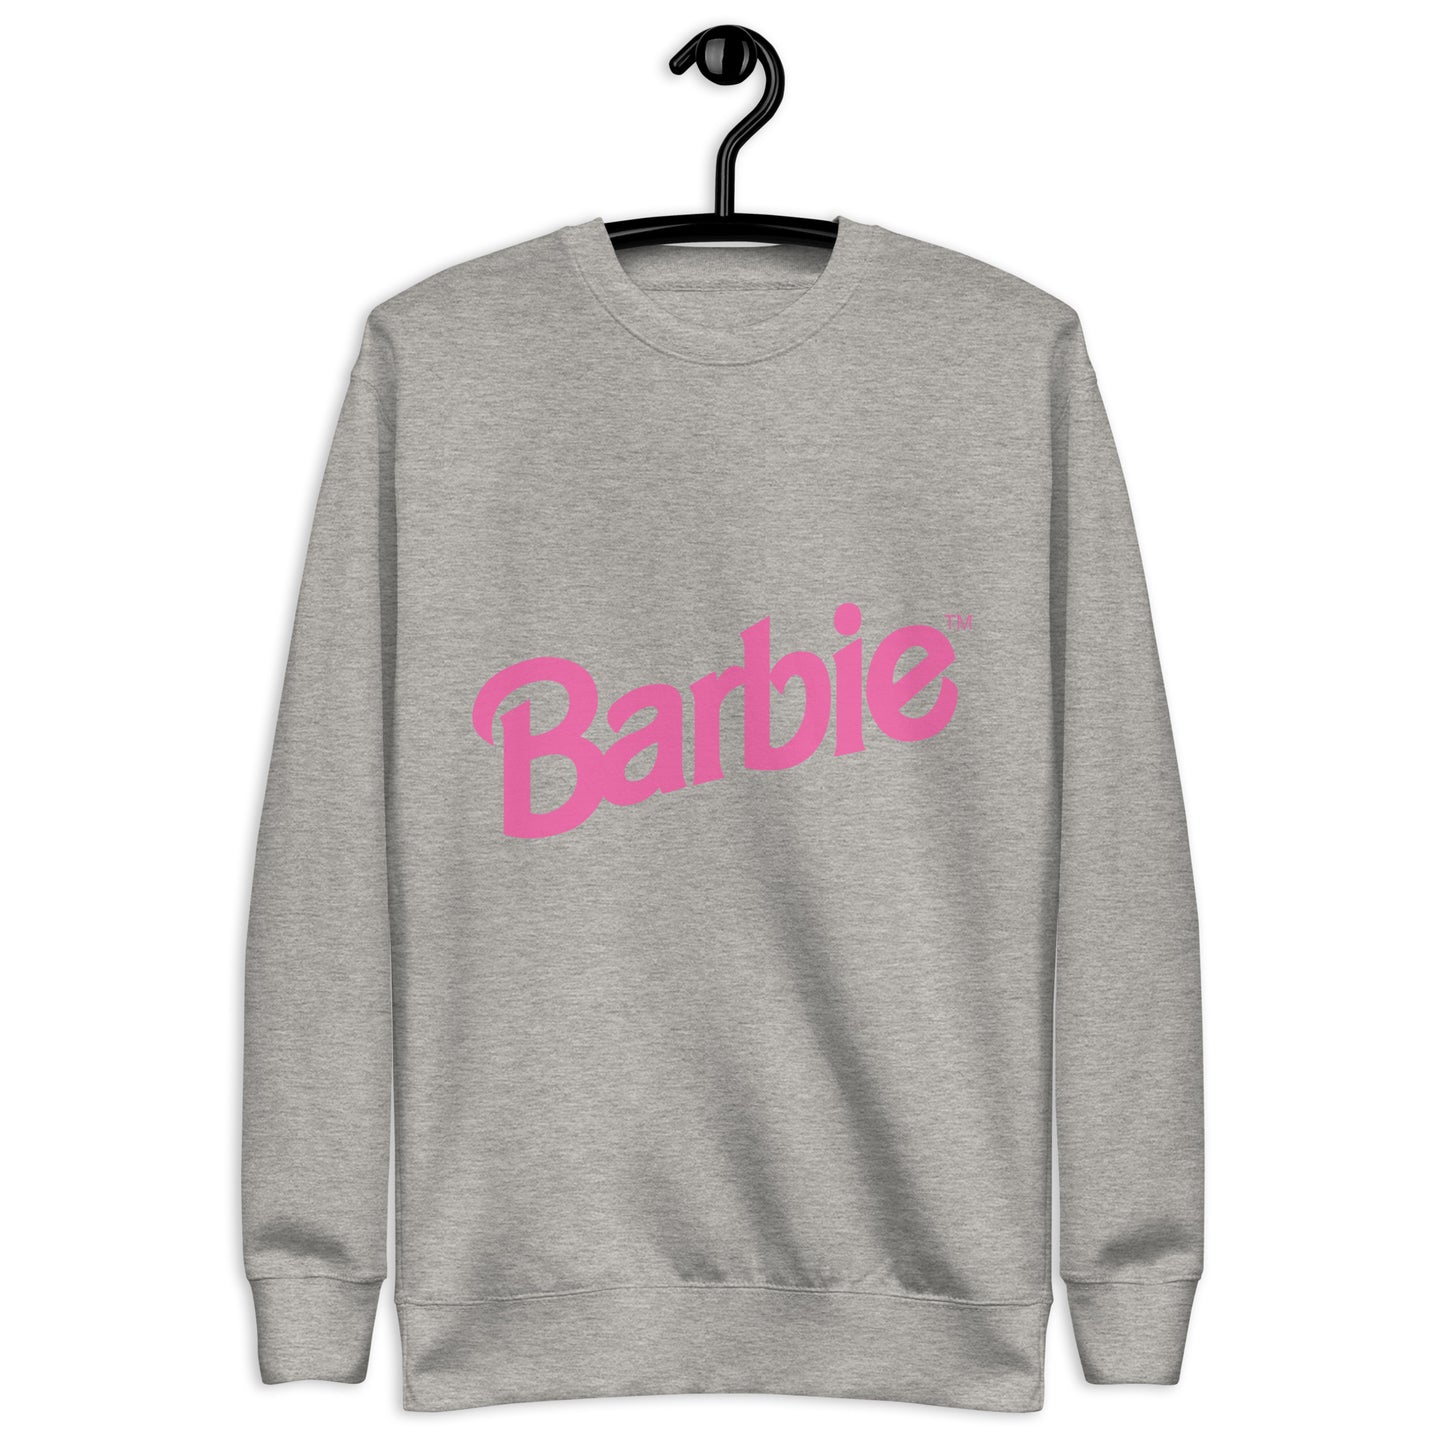 Barbie Sweater